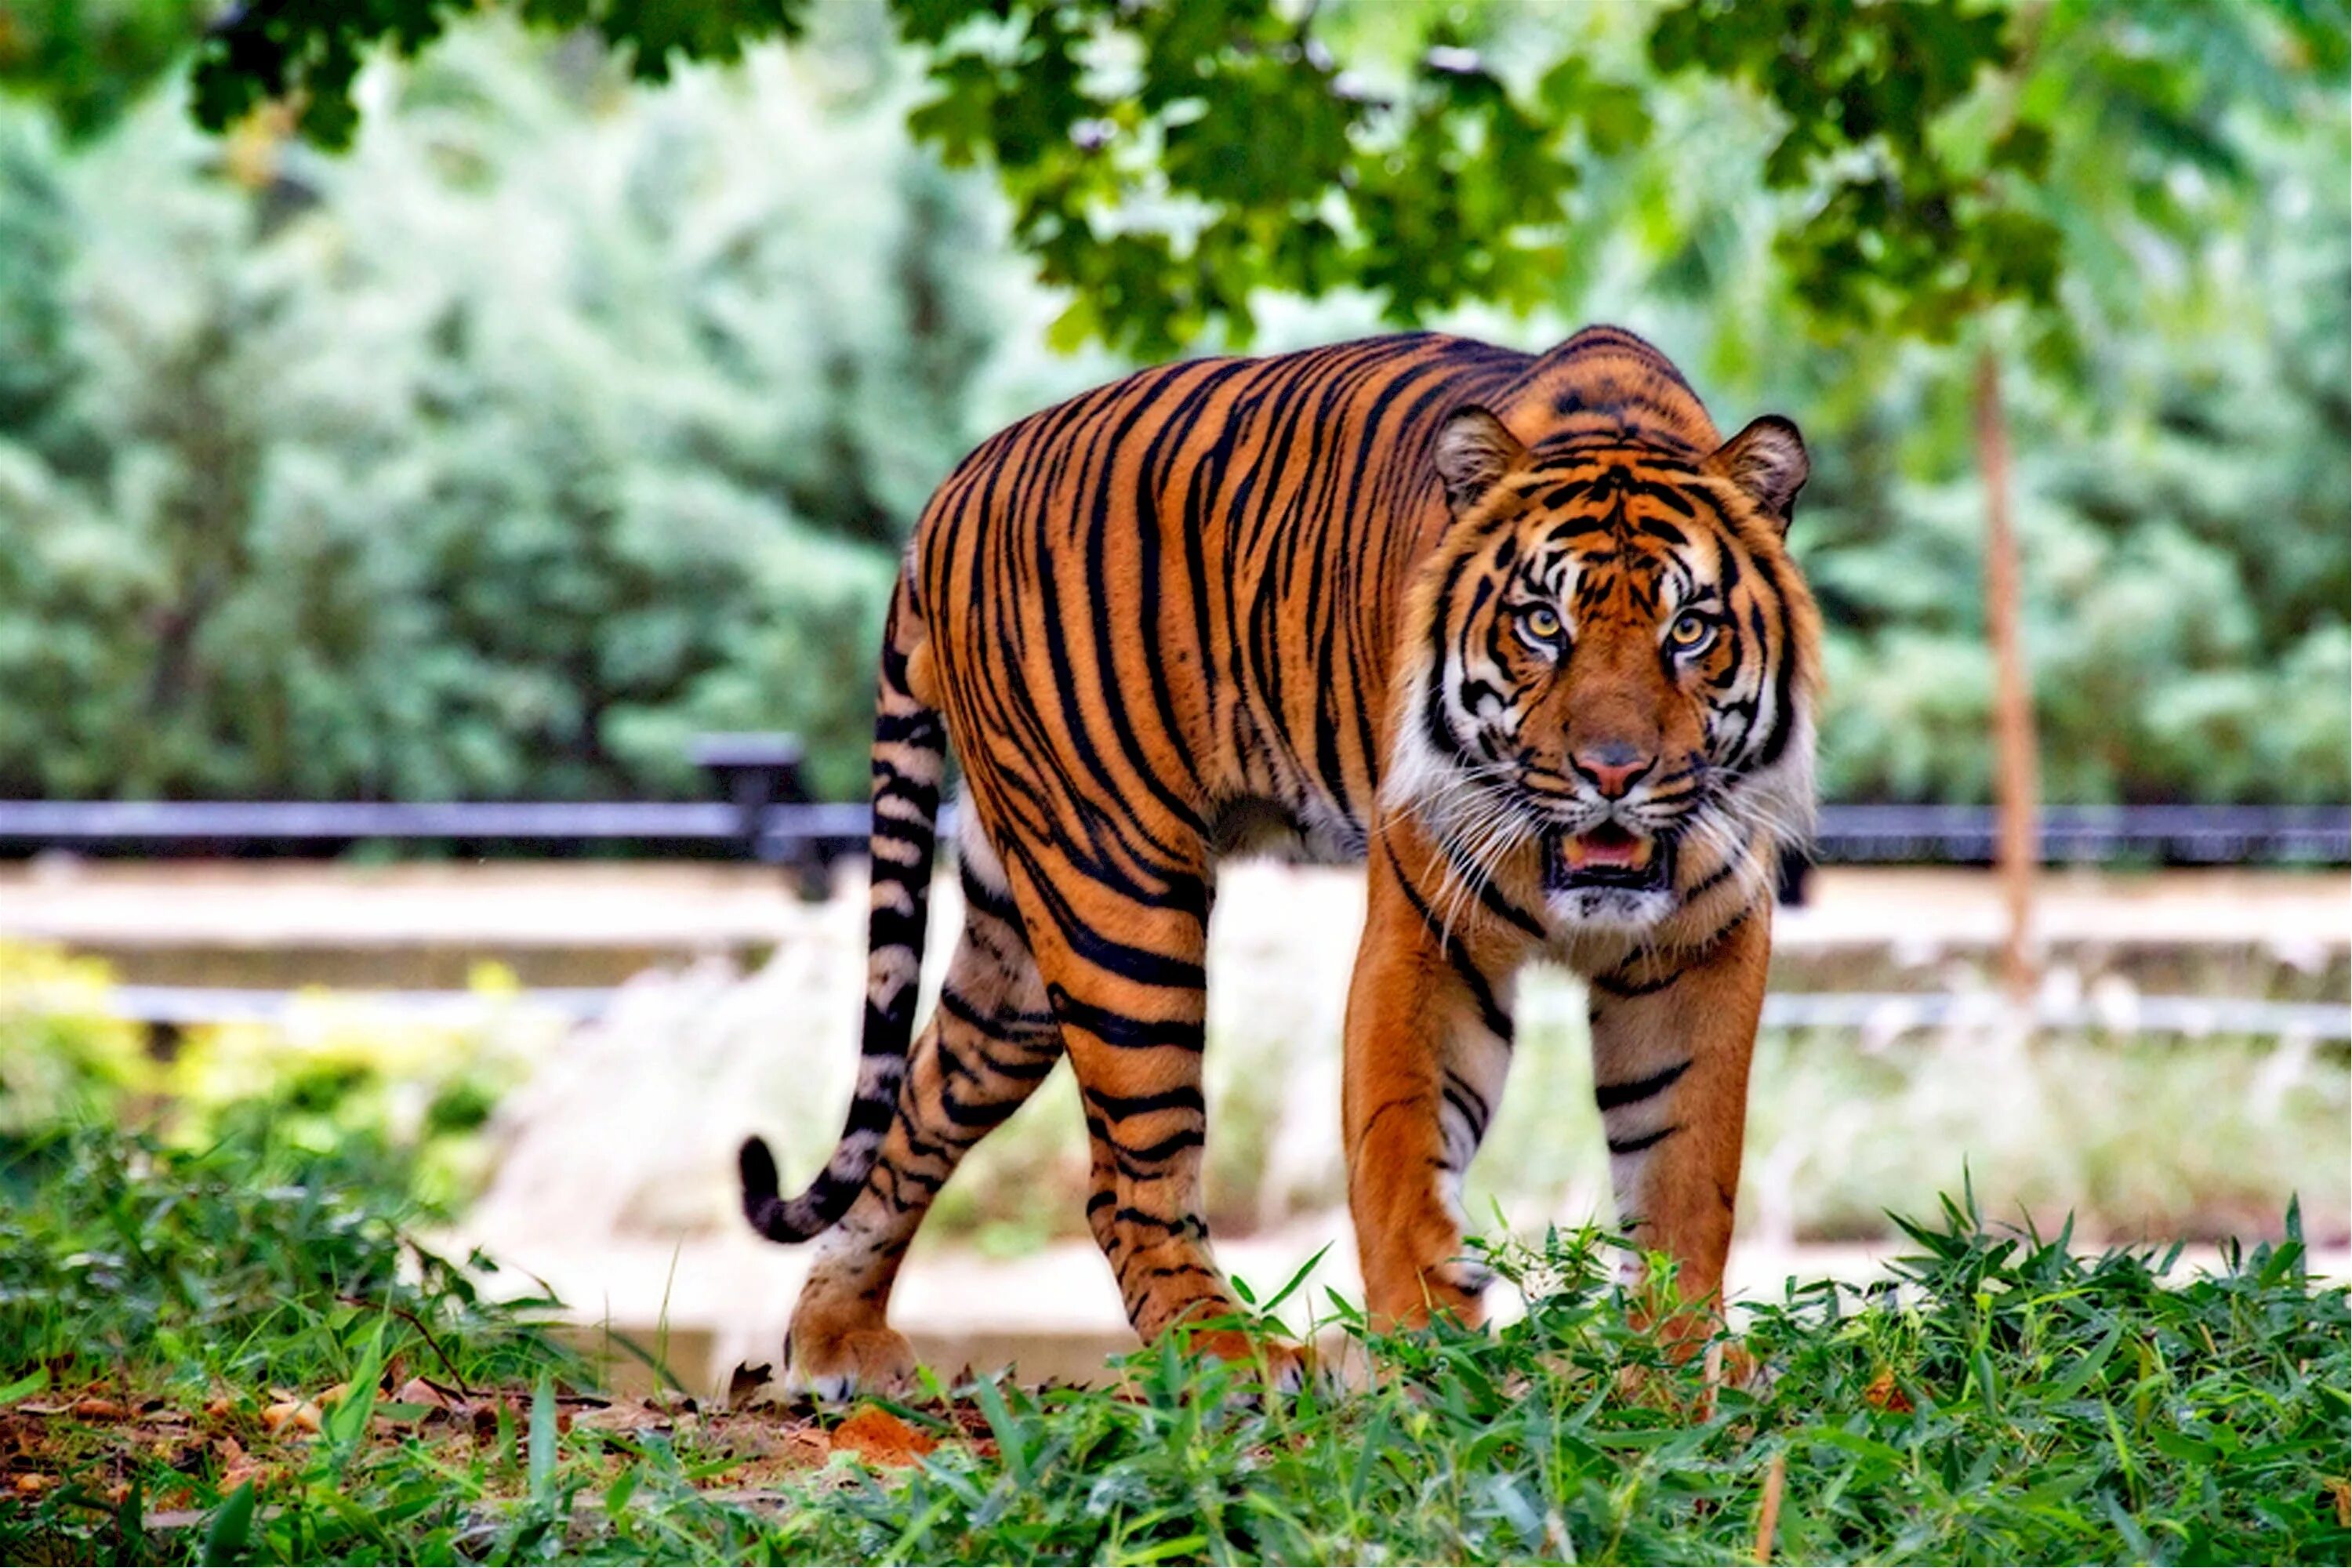 Animal 1 животное. Тайгер тигр. Суматранский тигр против ягуара. Суматранский тигр в зоопарке. Суматранский тигр.